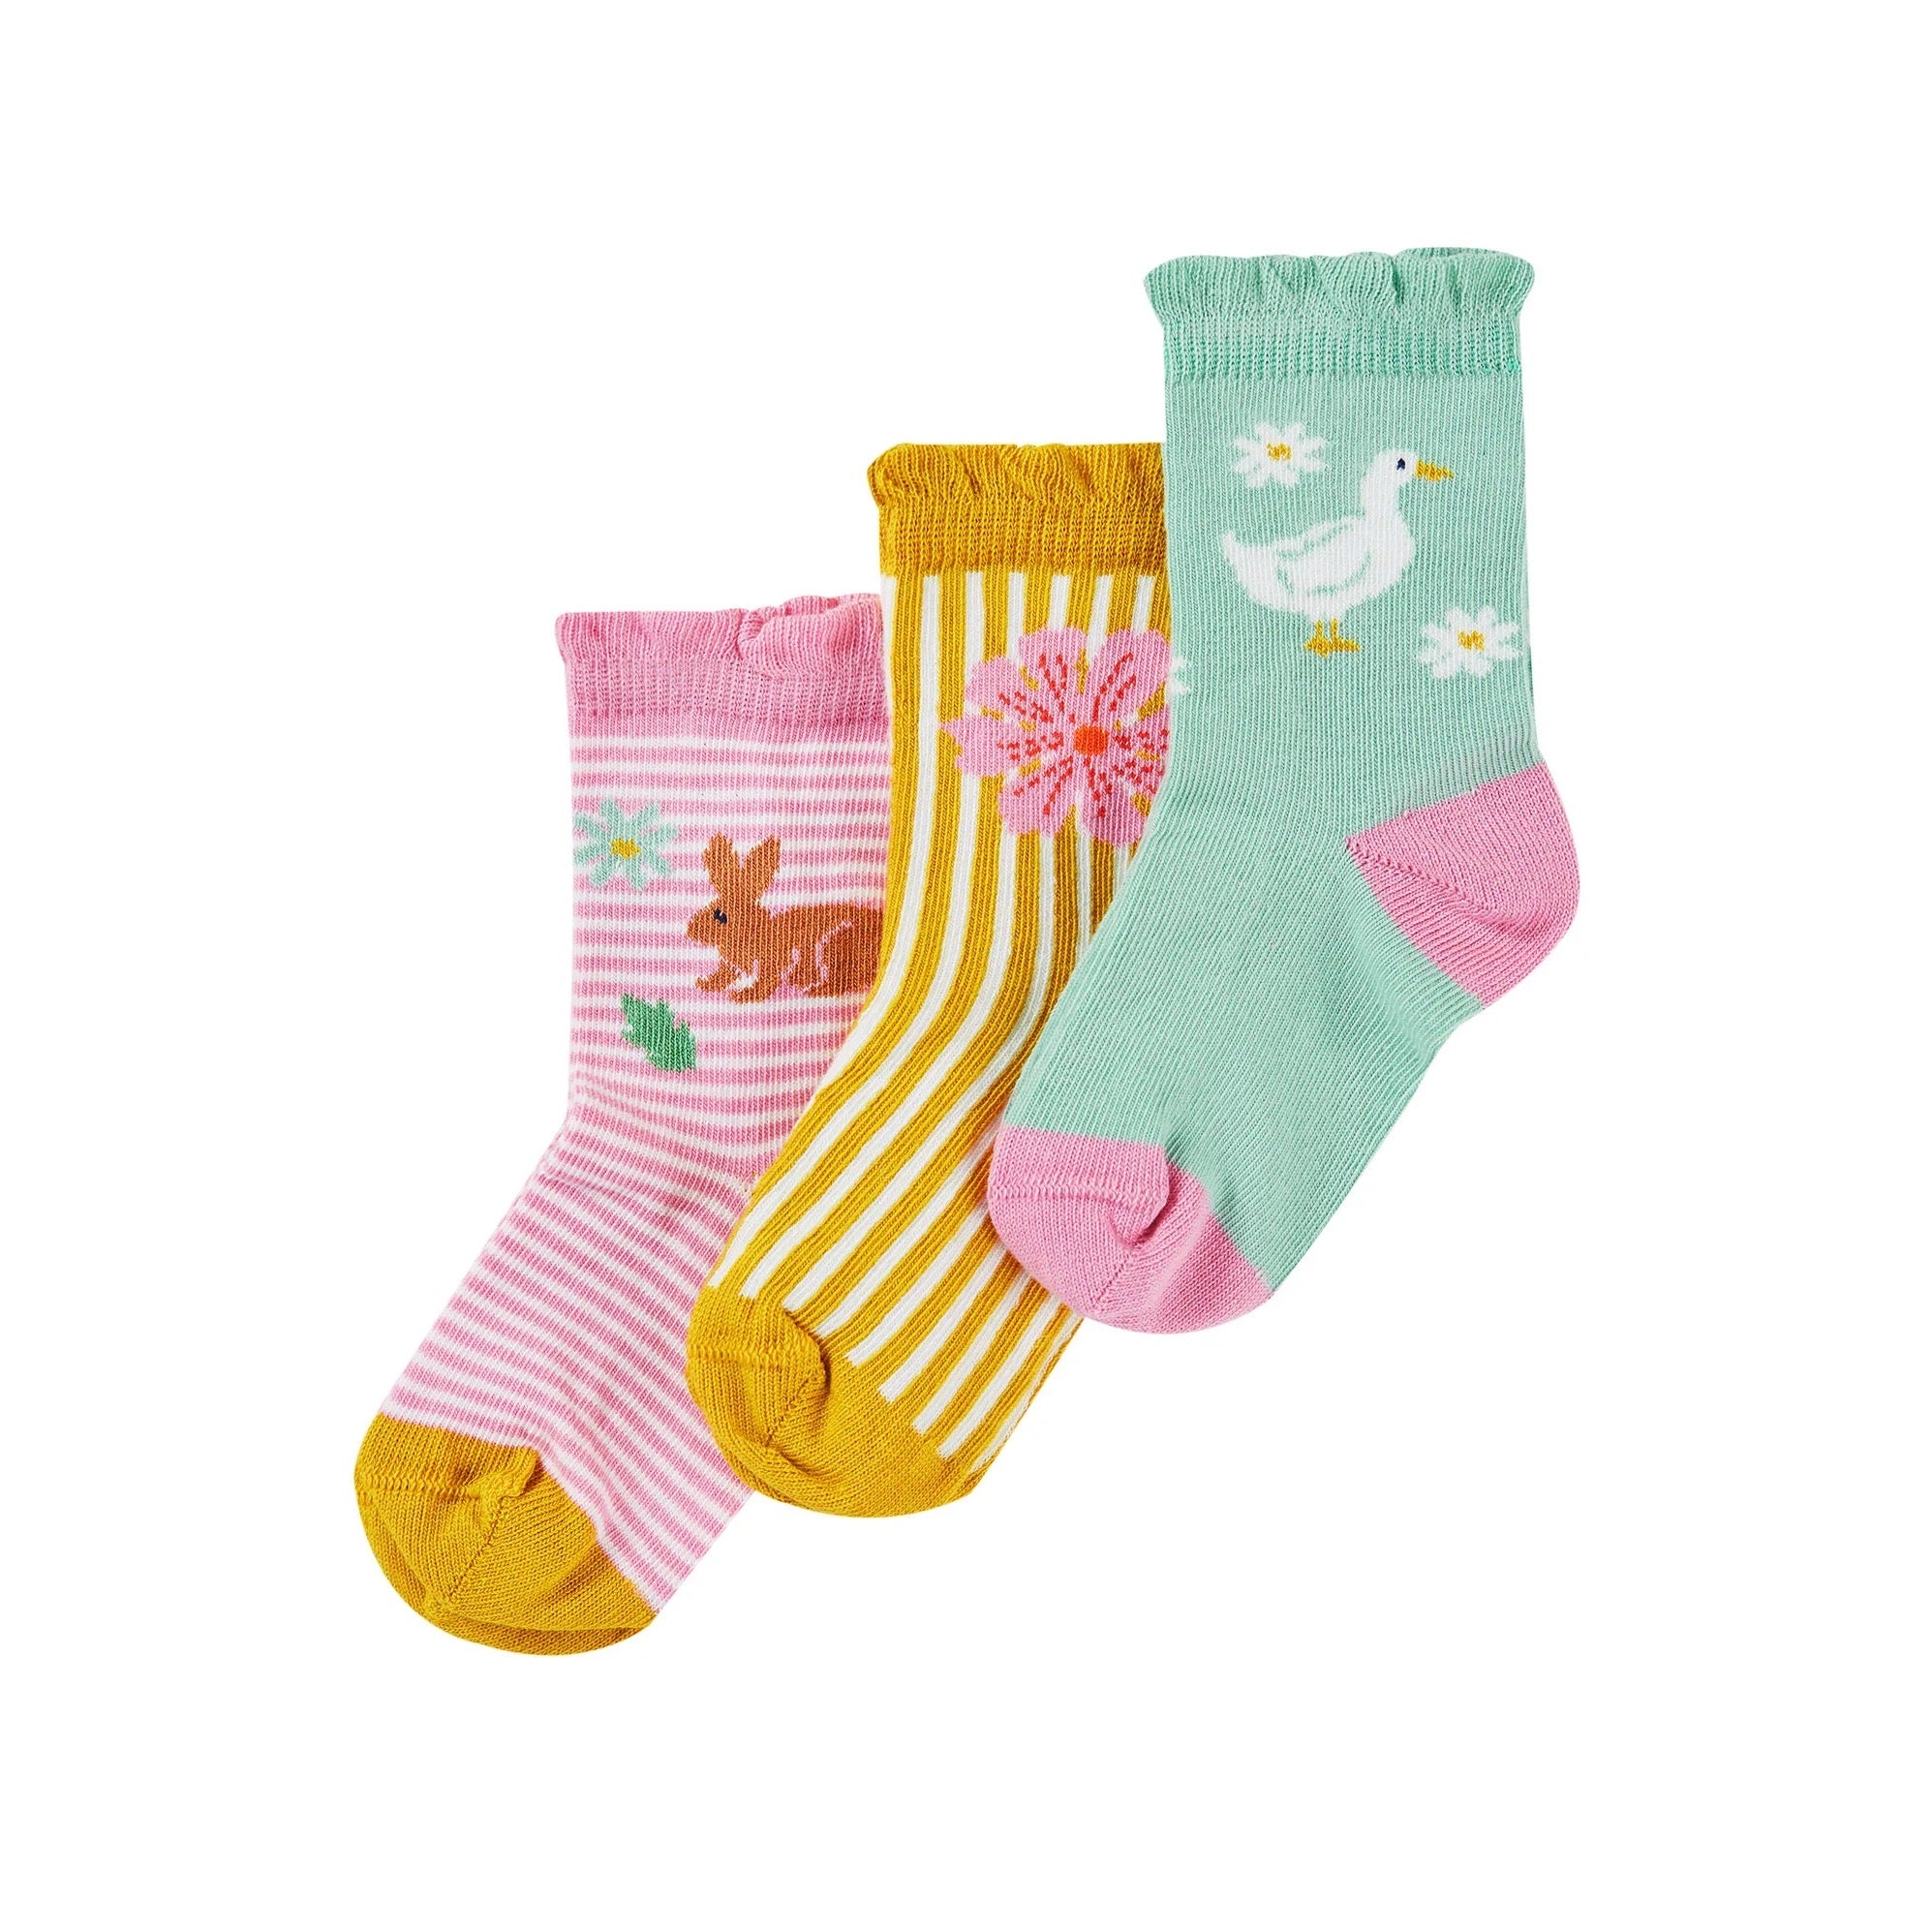 Frugi 3 Pack Infant Socks Freya Oz9pi Ducks Clothing 0-6M / Multi,6-12M / Multi,1-2YRS / Multi,UK6-8 / Multi